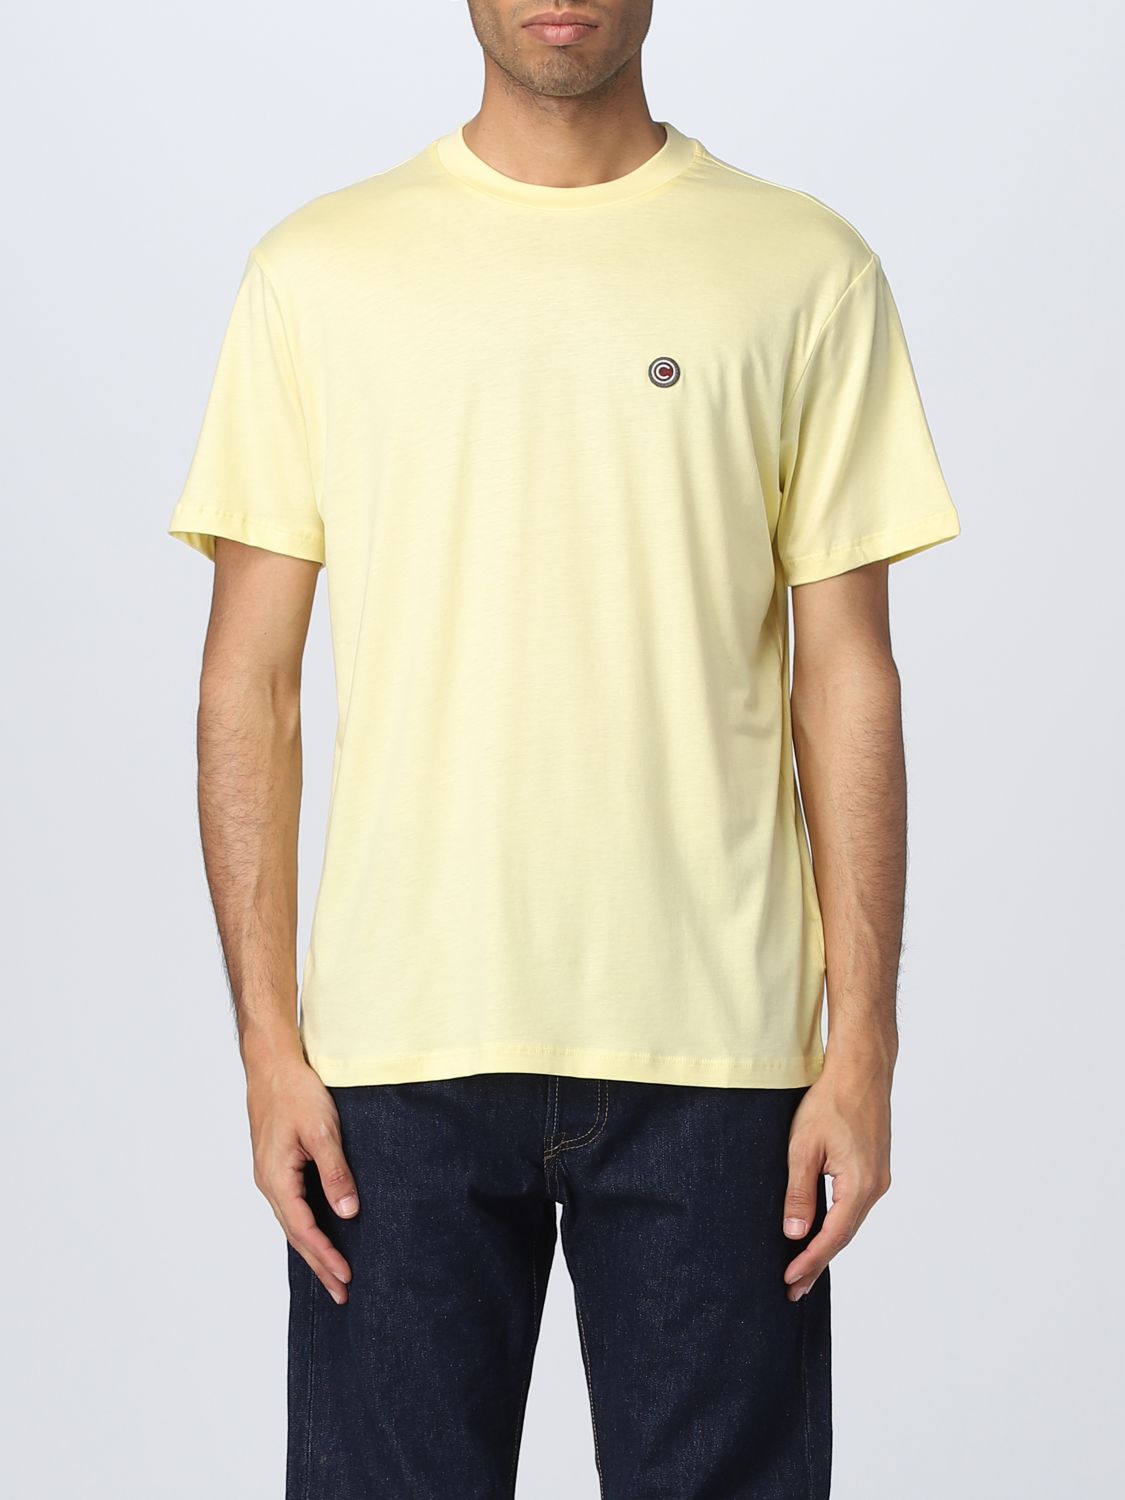 COLMAR: t-shirt for man - Yellow | Colmar t-shirt 75798WS online on ...